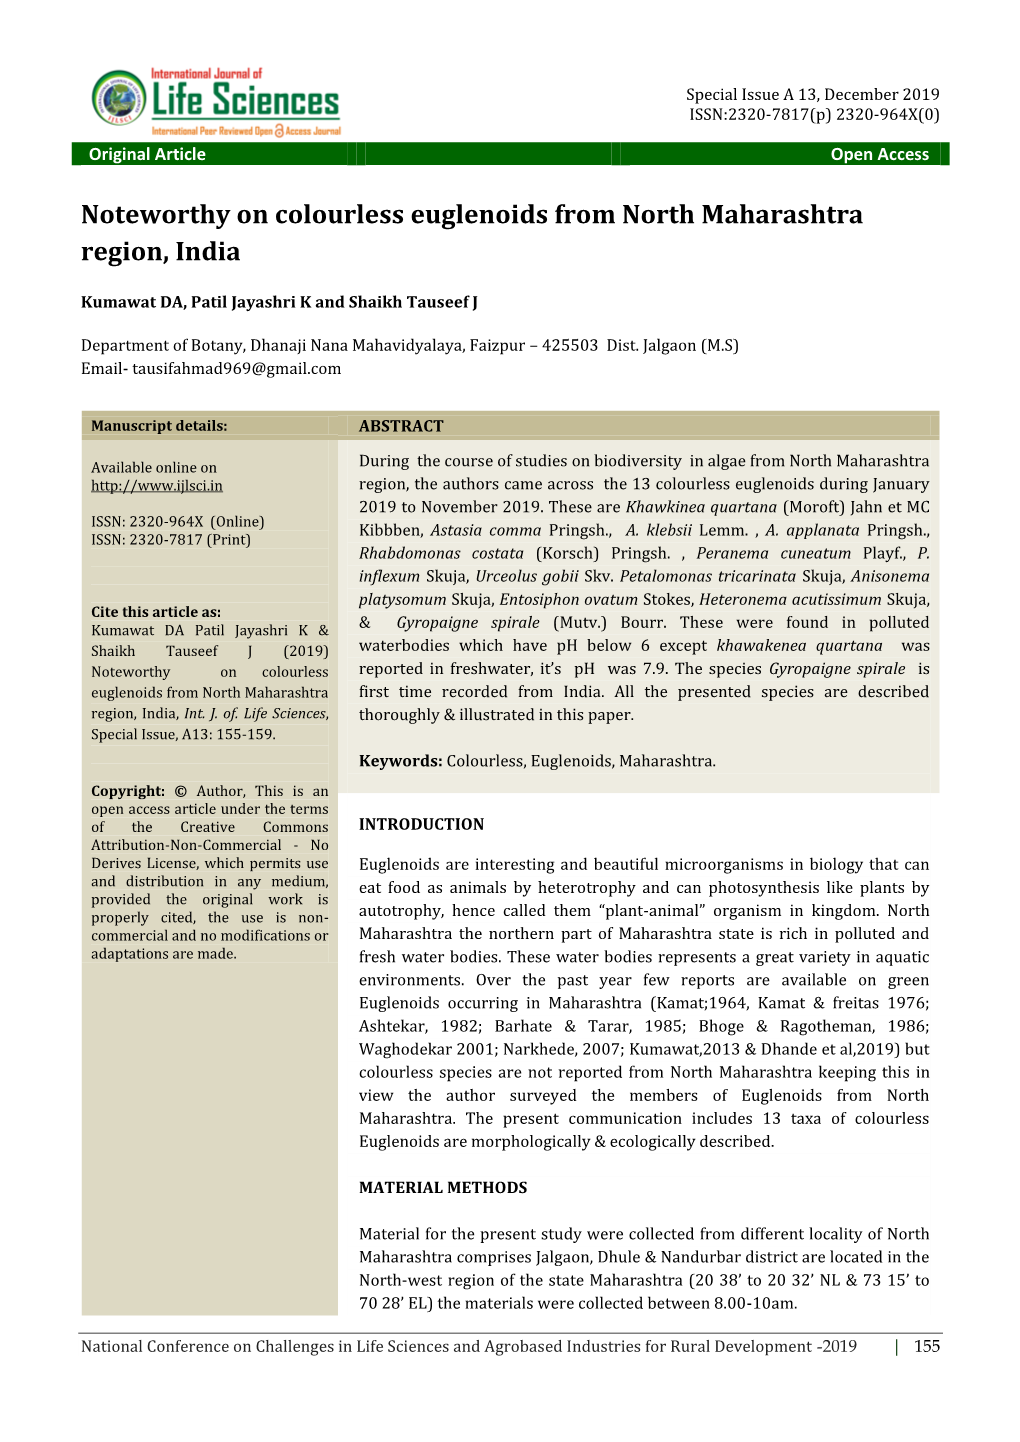 Noteworthy on Colourless Euglenoids from North Maharashtra Region, India